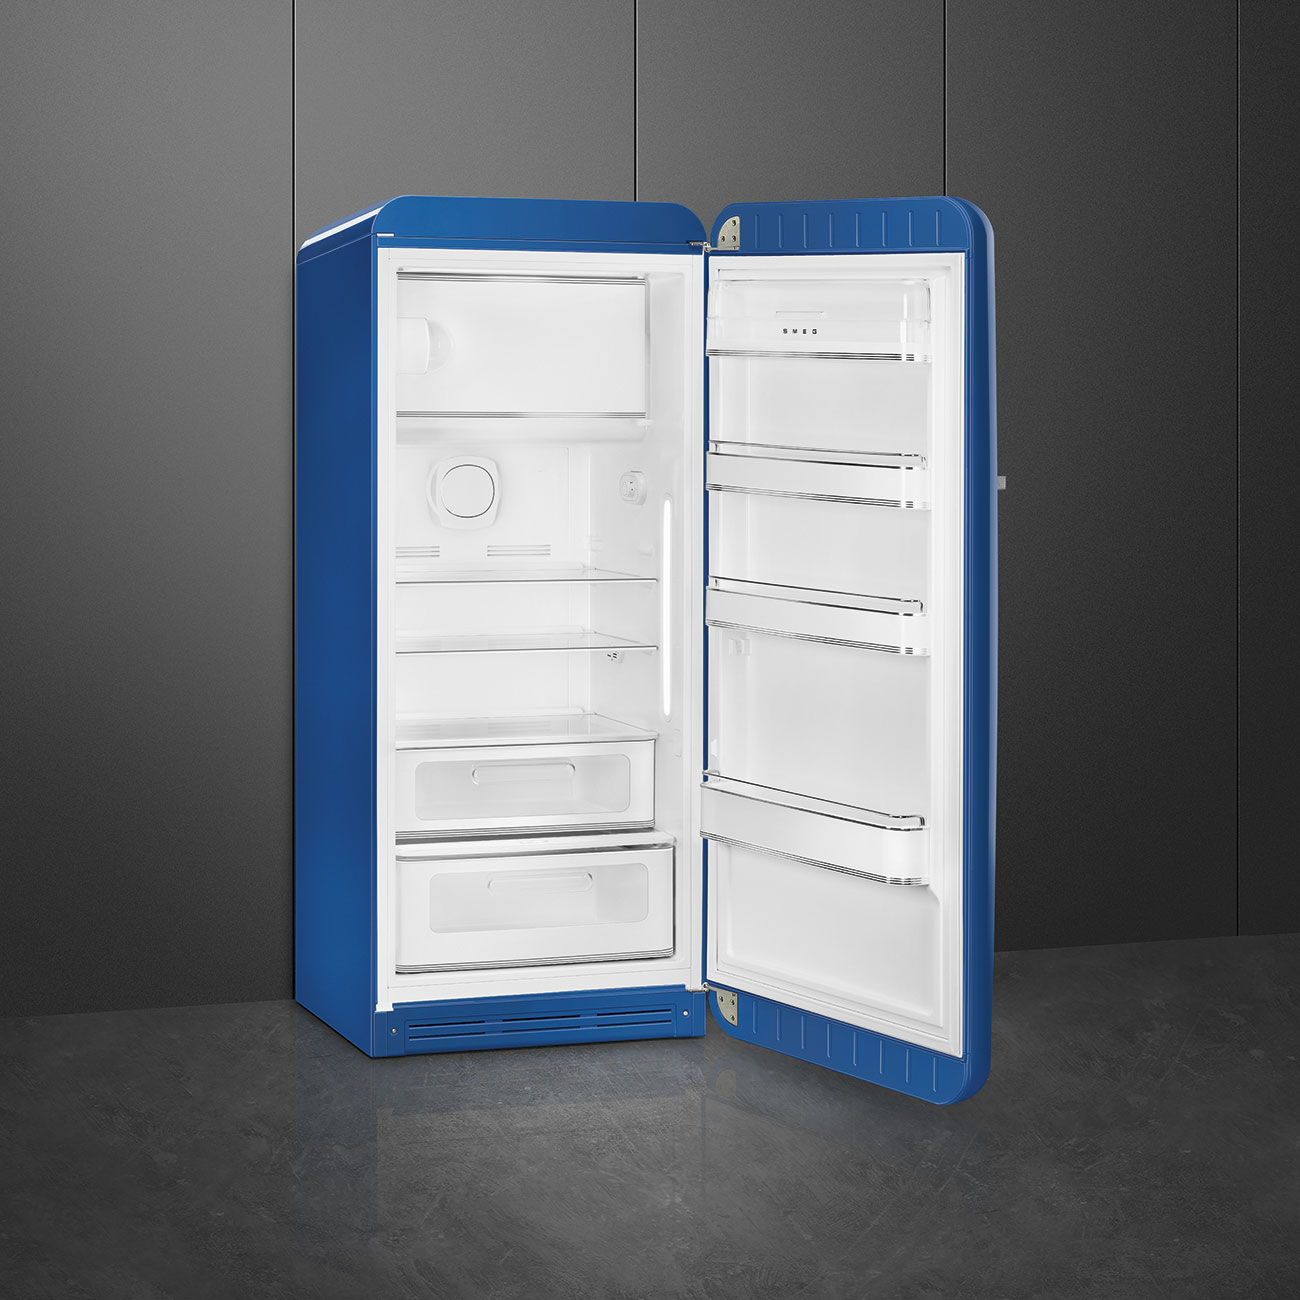 Blauw koelkast - Smeg_3